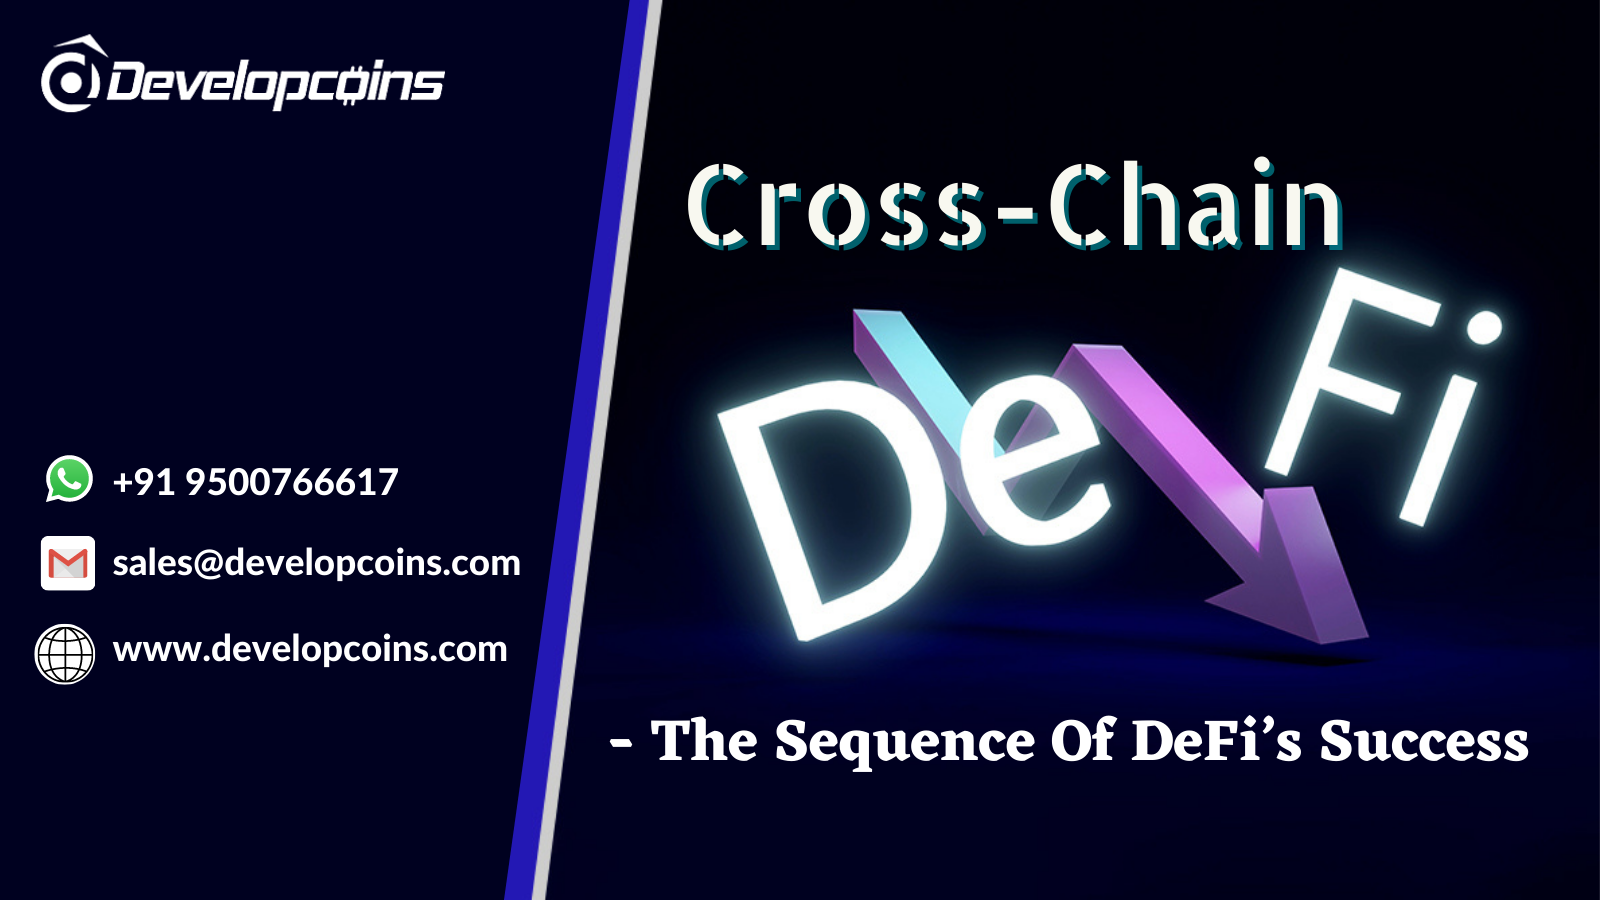 Cross-chain DeFi Development - The Sequence Of DeFi’s Success